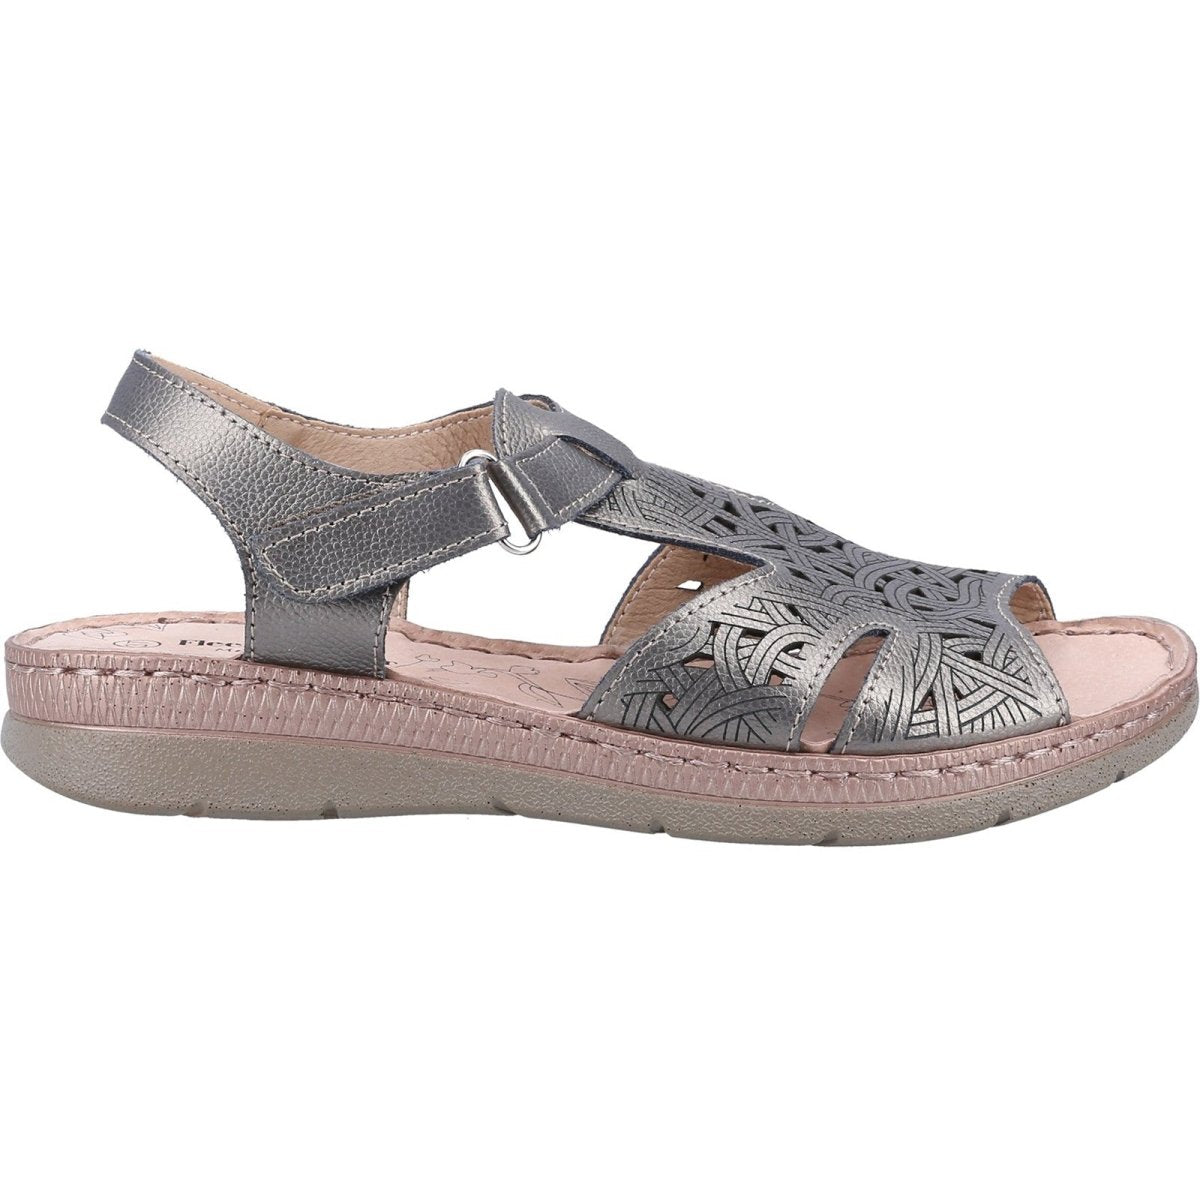 Fleet & Foster Ruth Ladies Open-Toe Summer Sandals - Shoe Store Direct